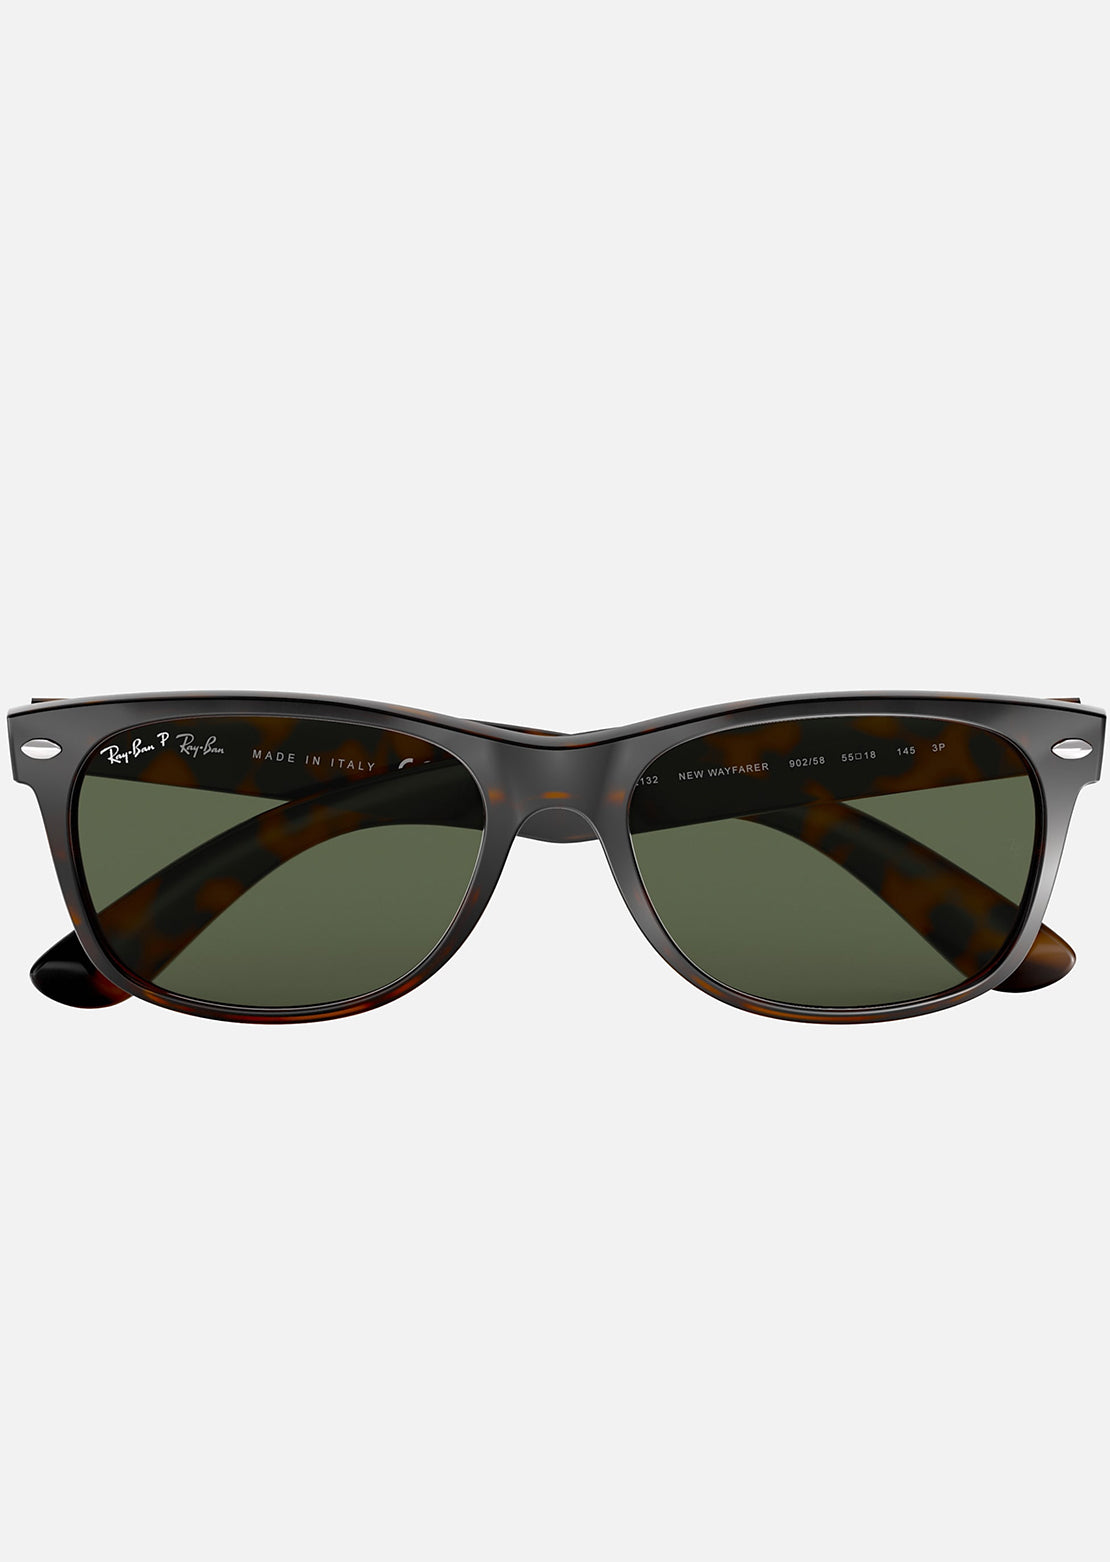 Ray-Ban RB2132 New Wayfarer Sunglasses - PRFO Sports